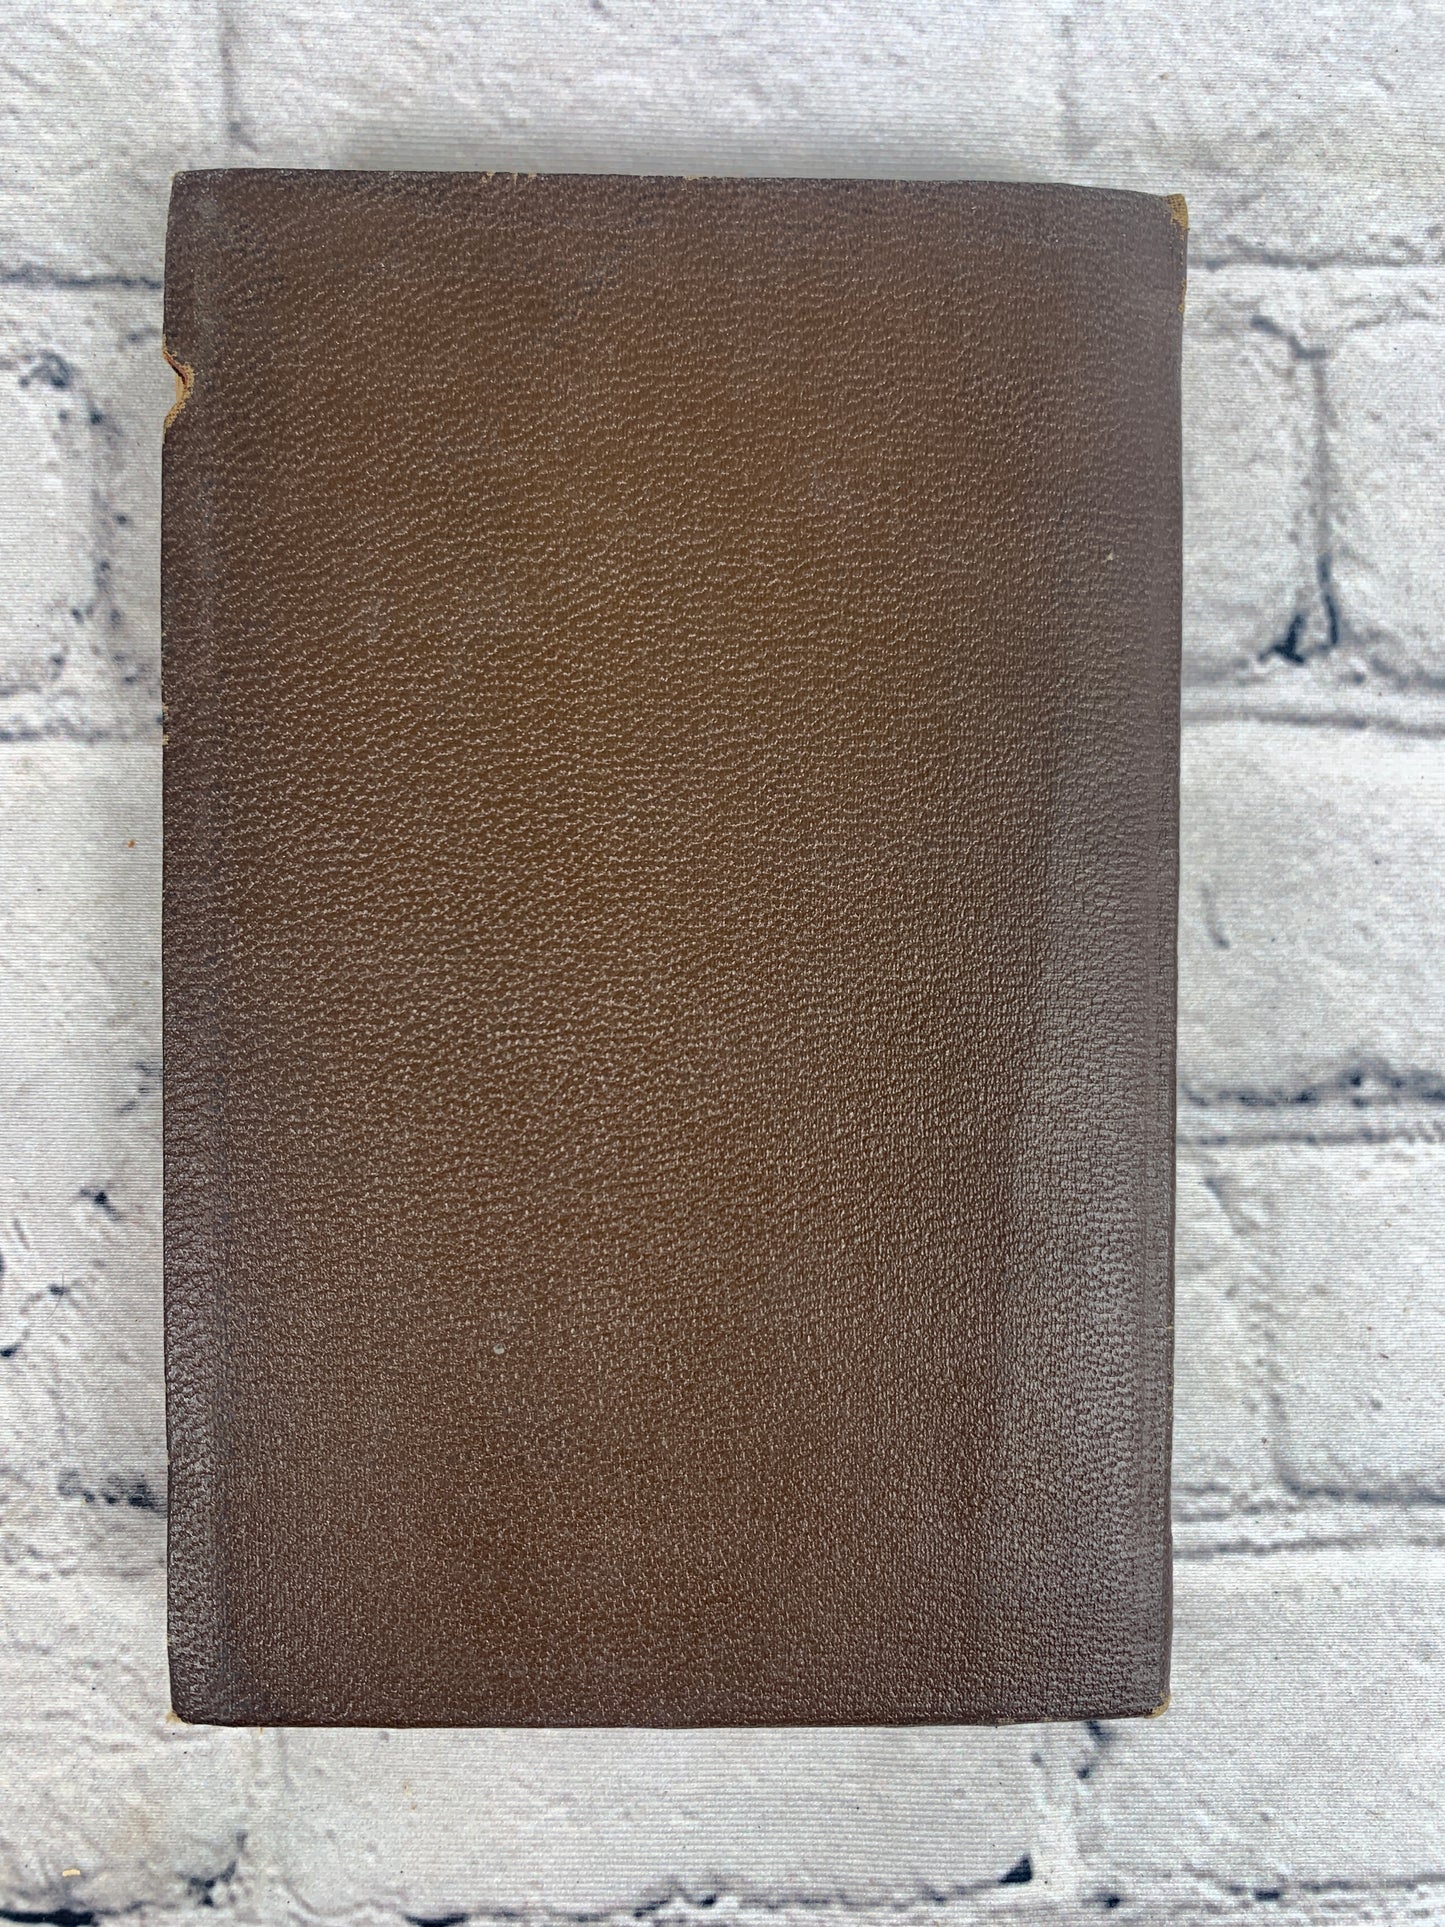 Samuel Pepys' Diary by Samuel Pepy [1921 · Modern Library]